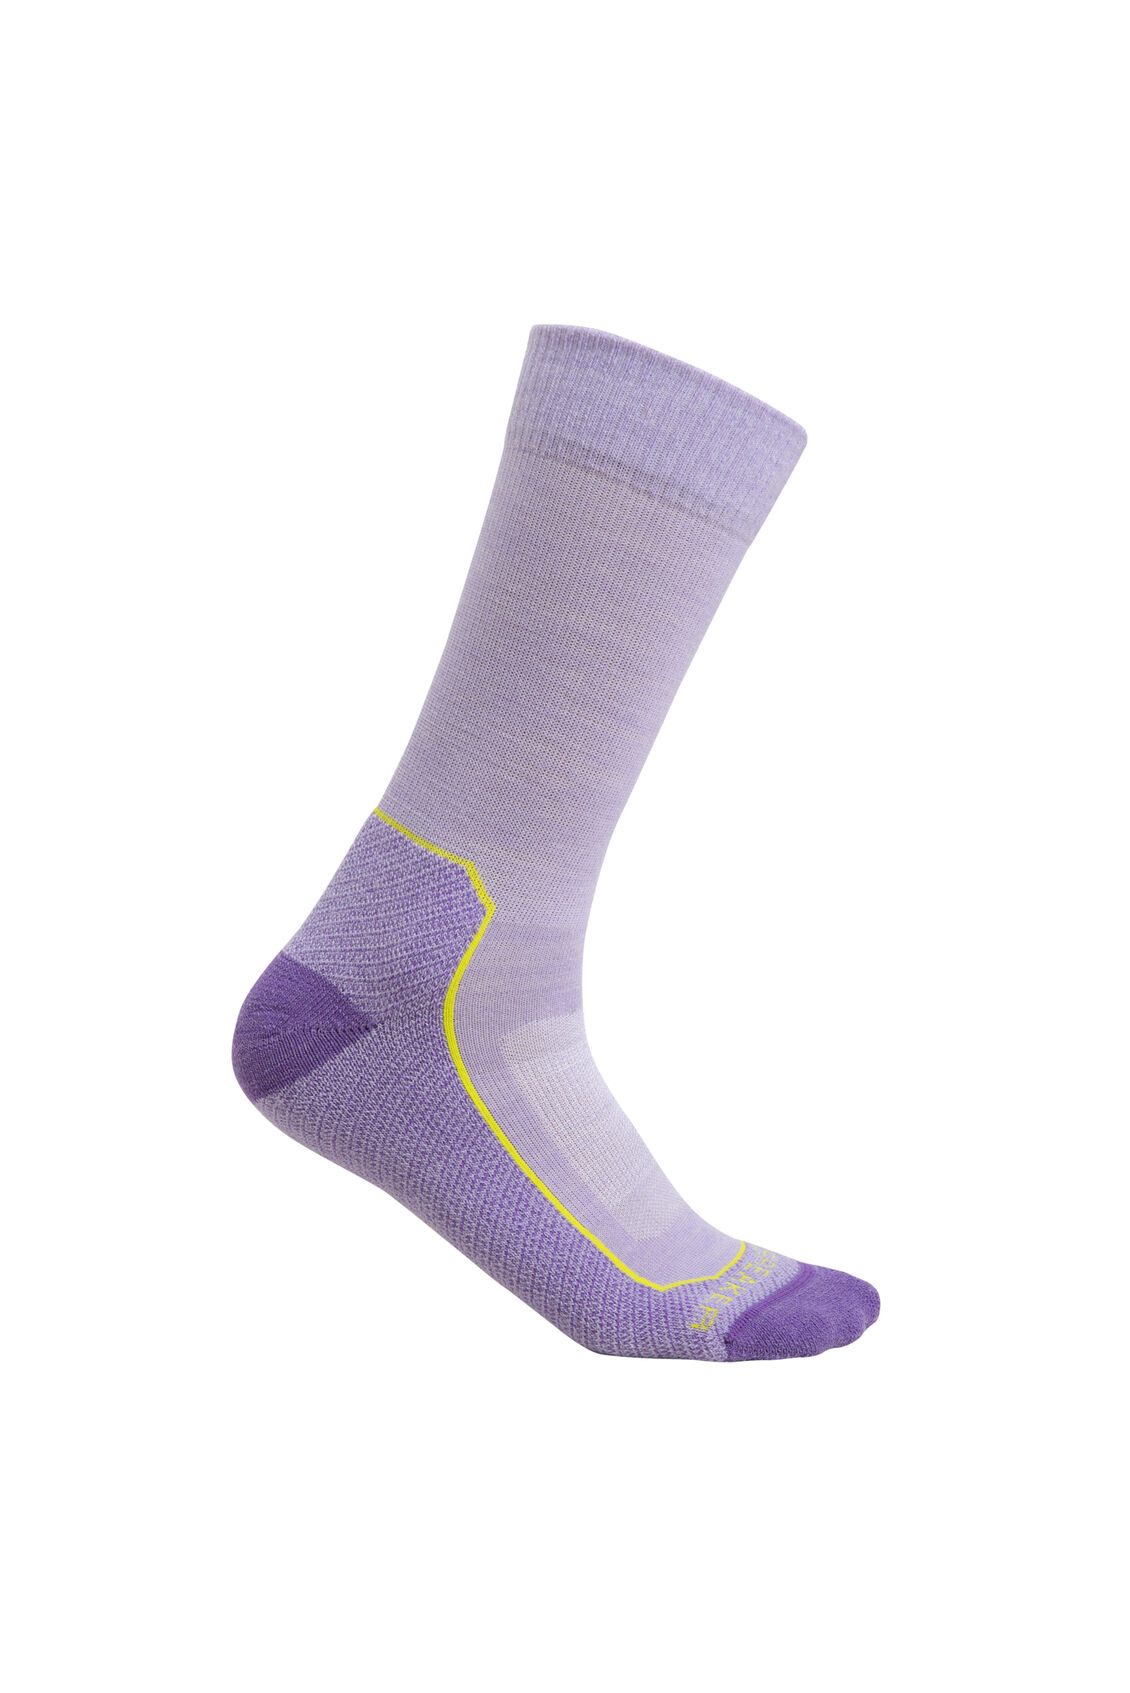 Icebreaker Merino Hike+ Light Crew Socks (Women's) - Purple Gaze/Magic - Find Your Feet Australia Hobart Launceston Tasmania